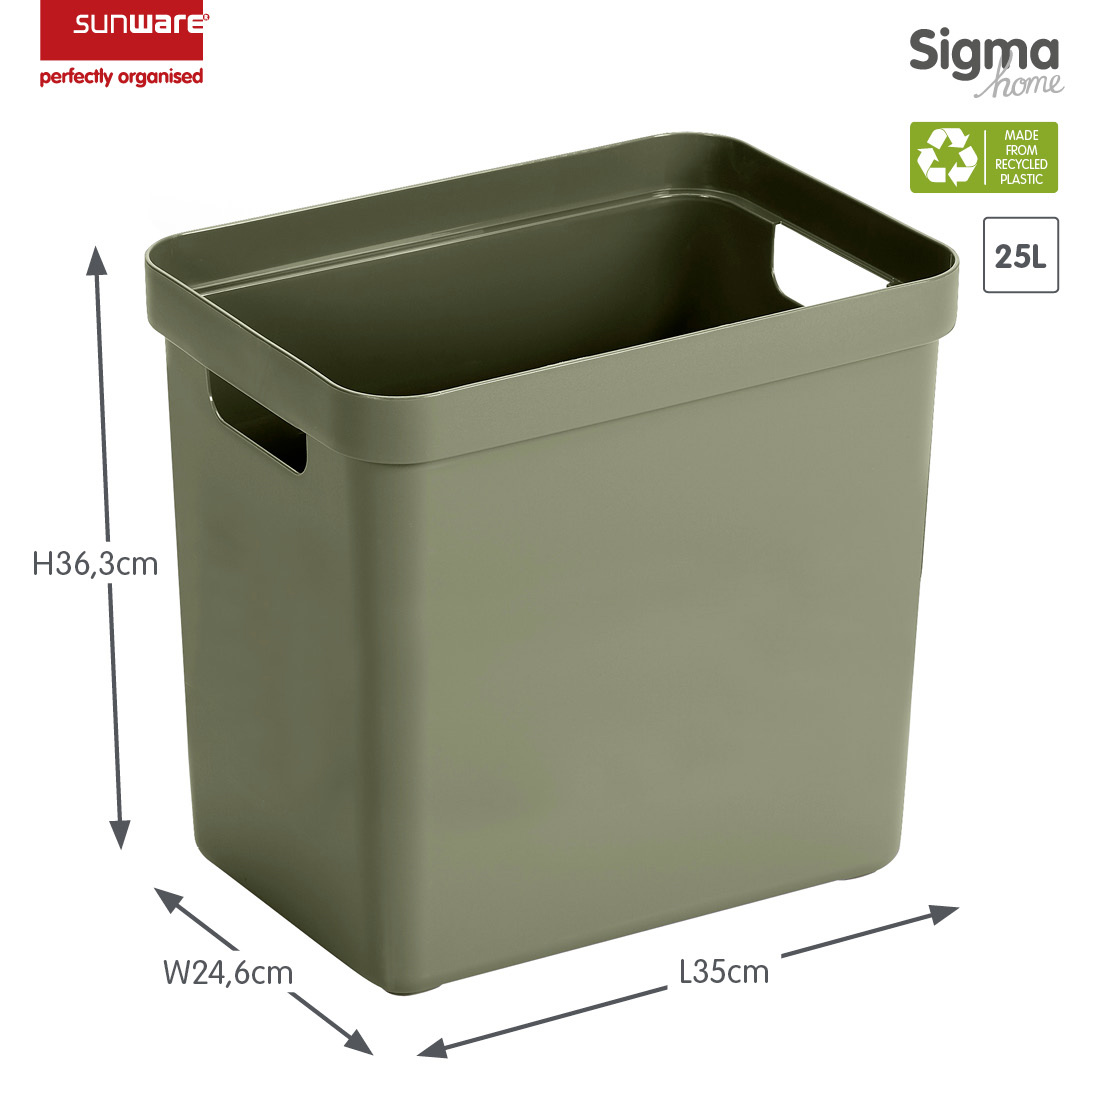 Sigma home Aufbewahrungsbox 25L dunkel grün